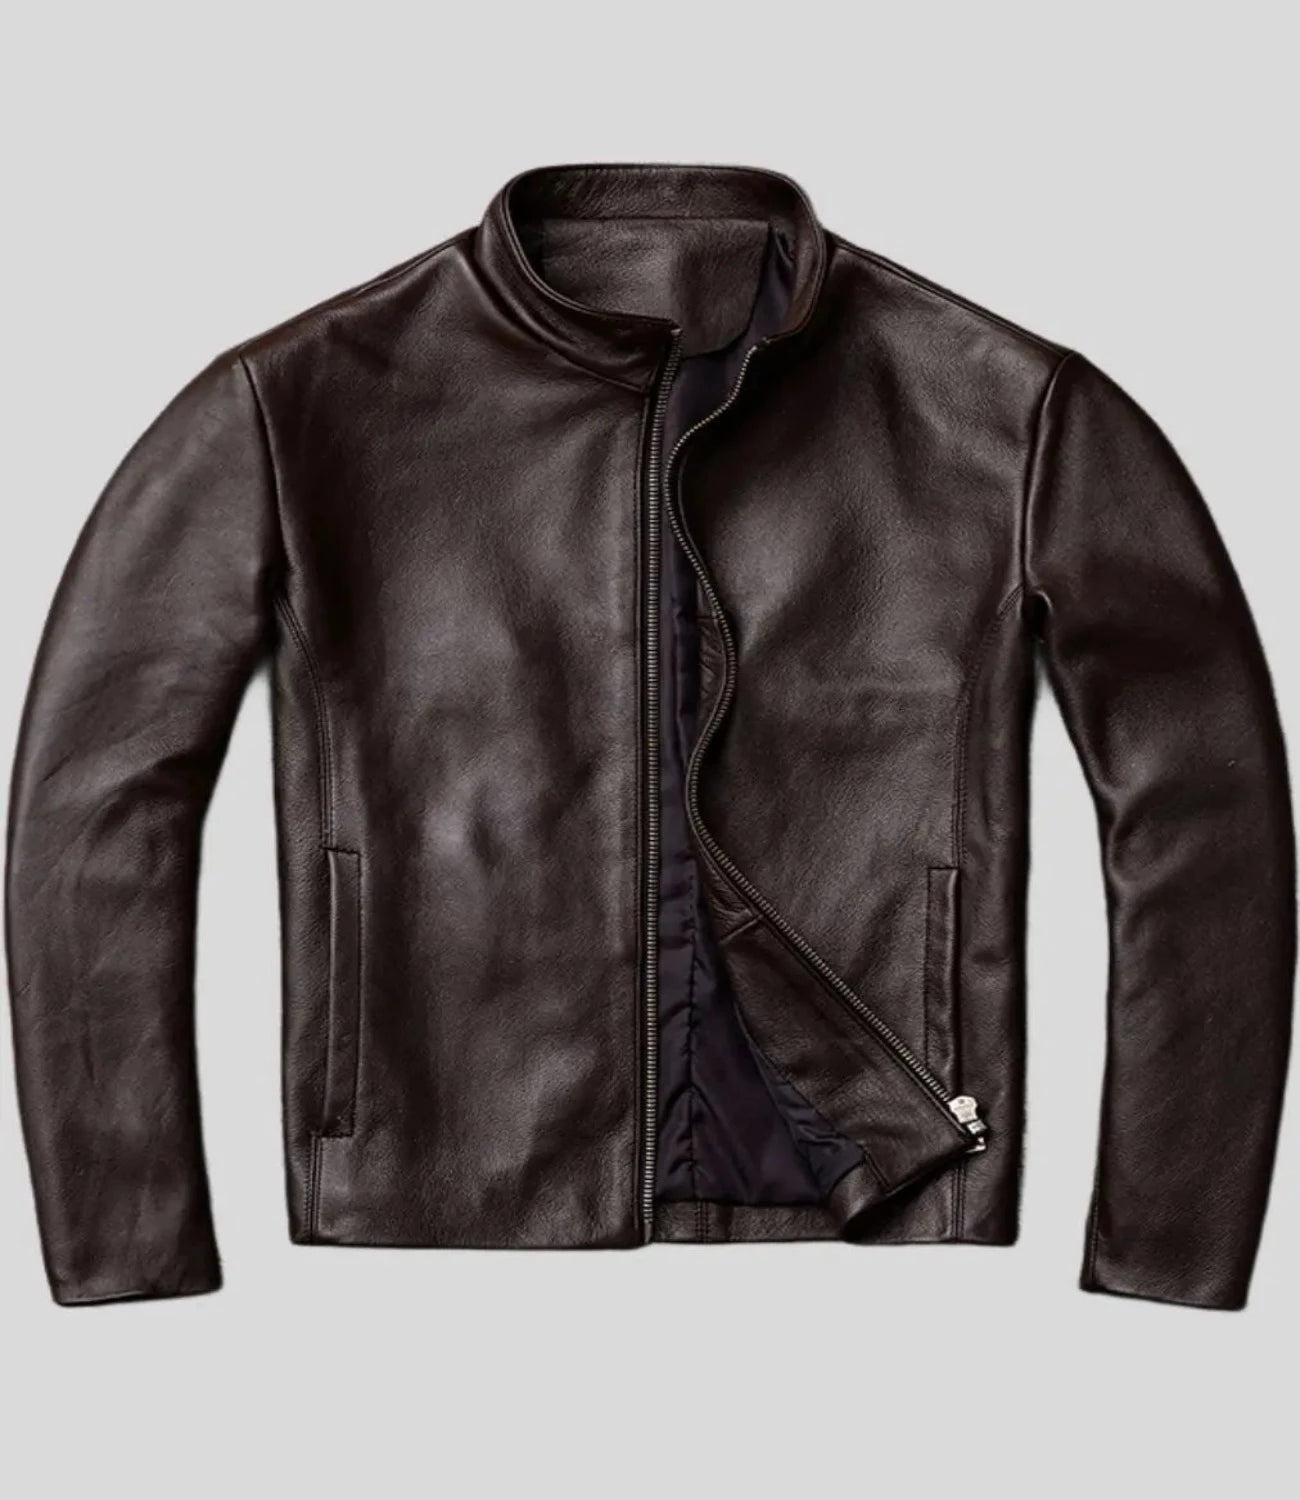 Men’s Dark Brown Leather Jacket